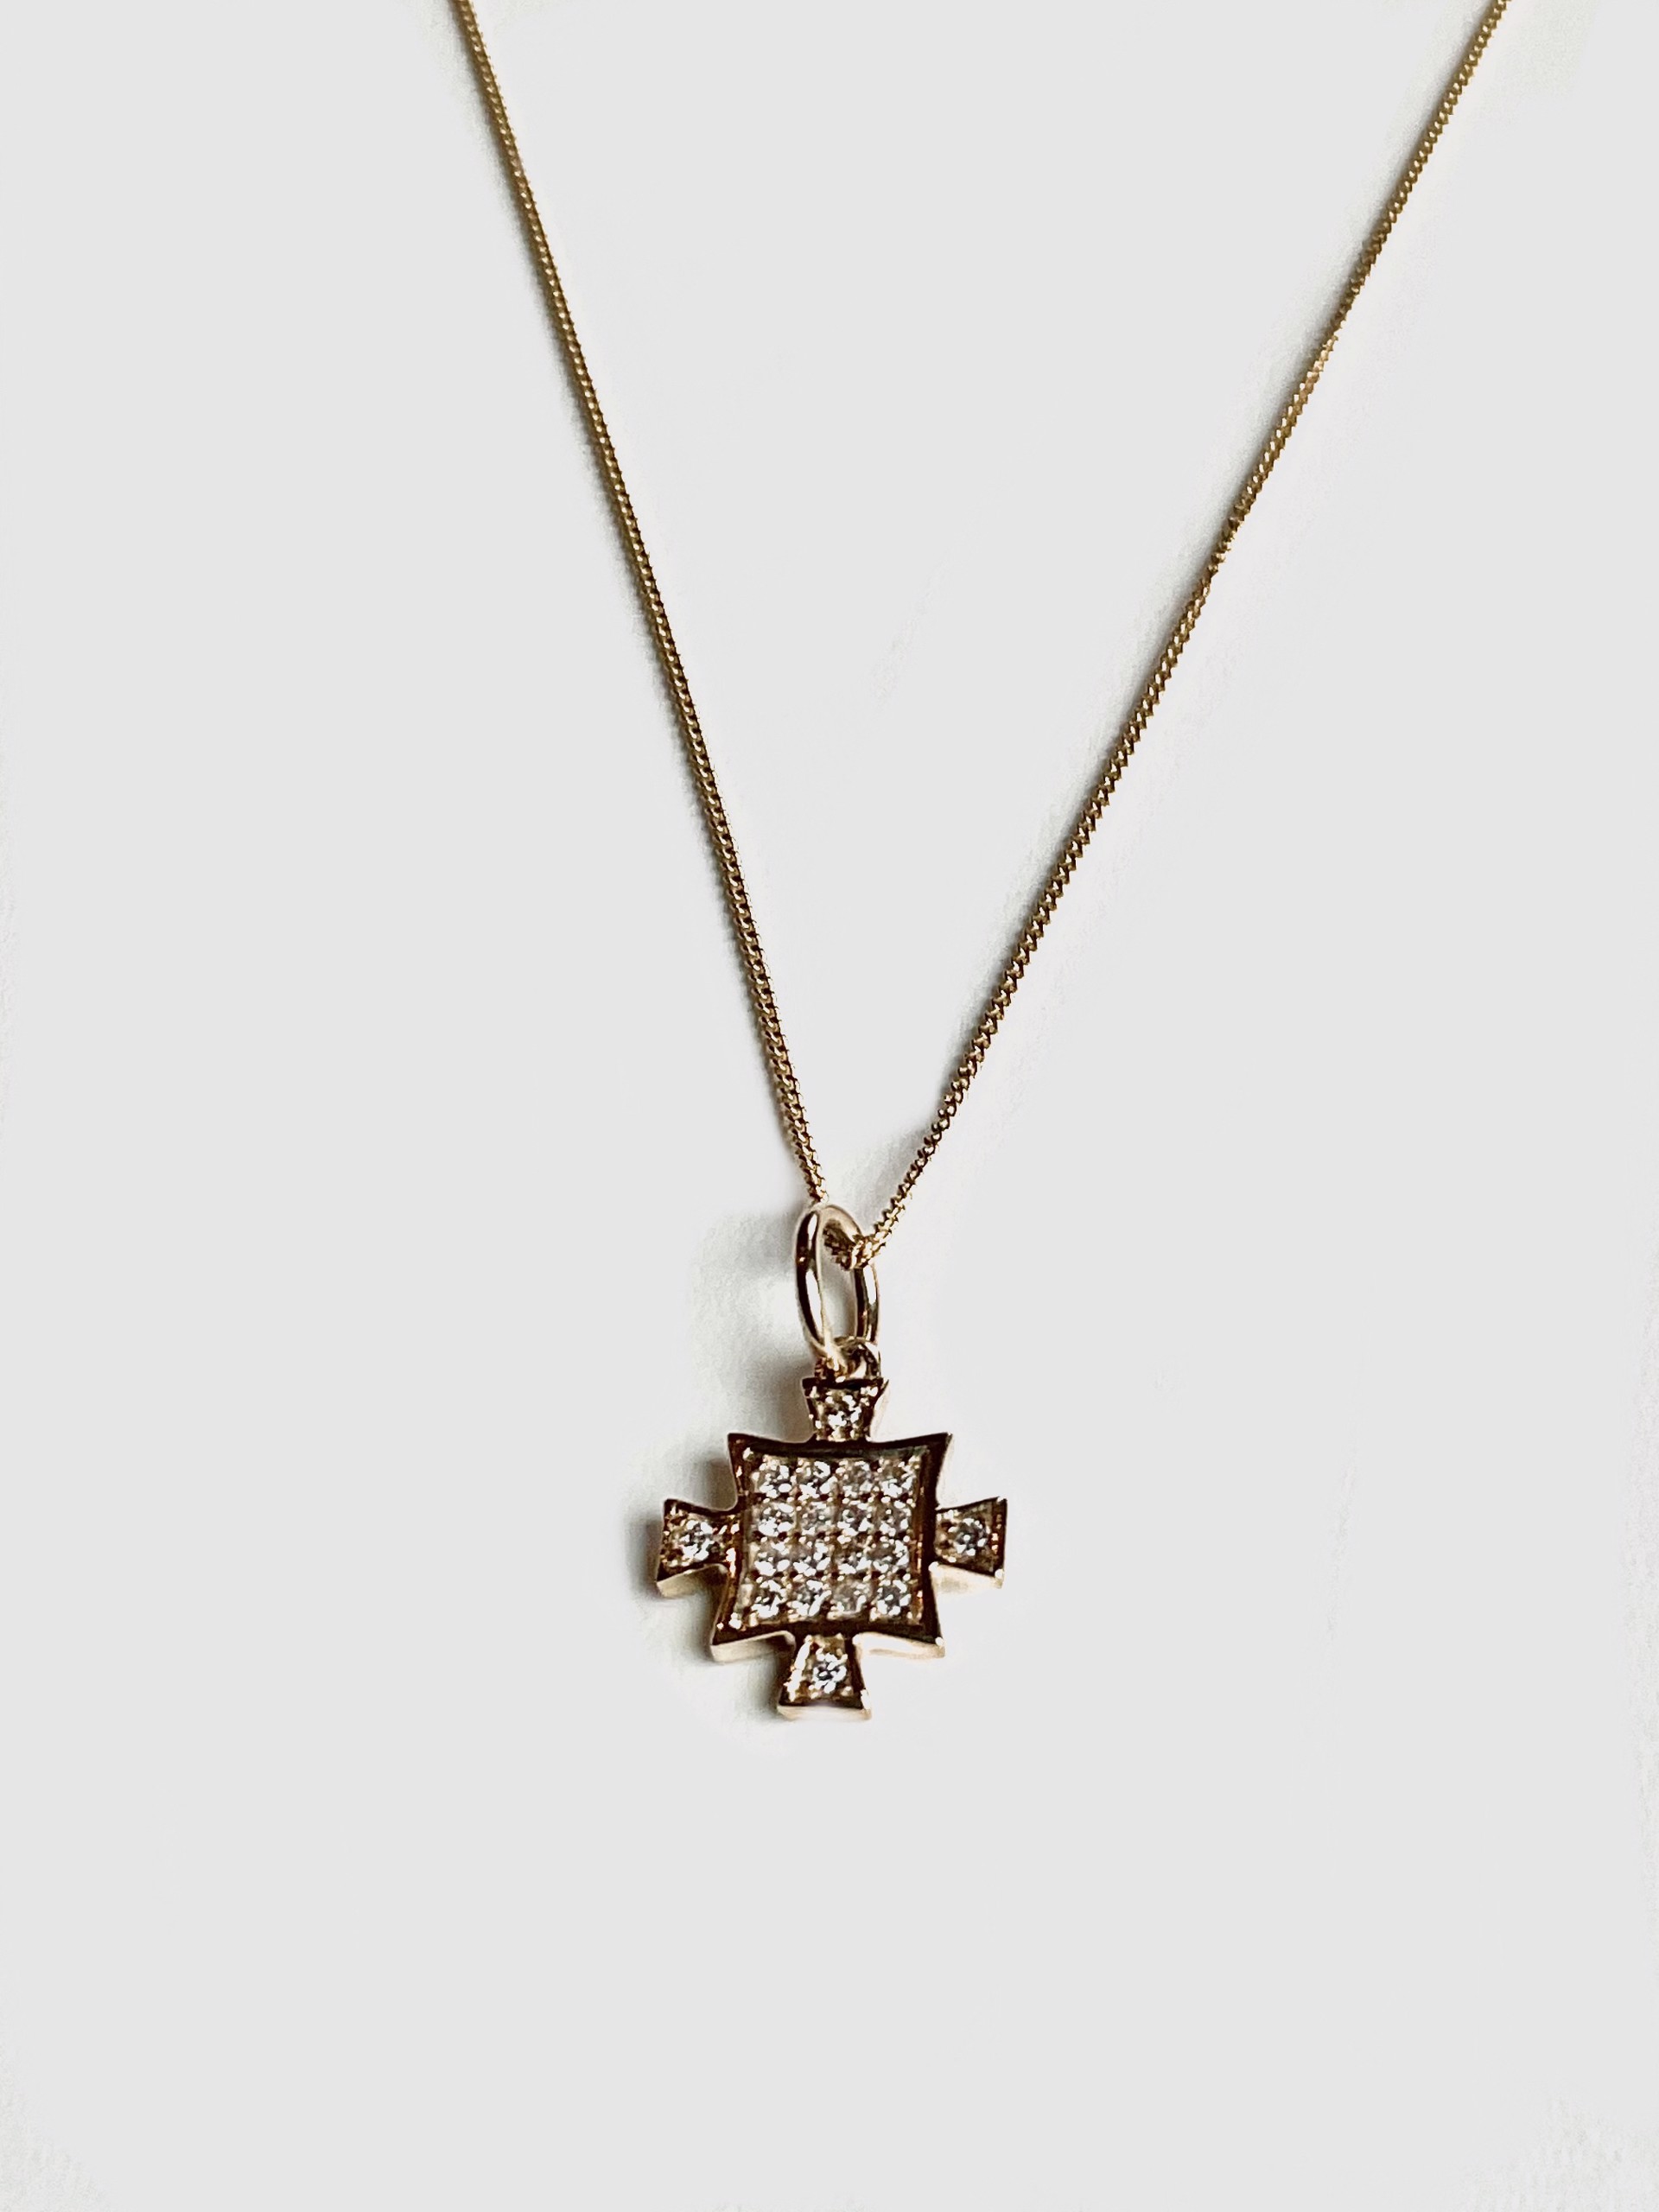 KB-N107 14K Gold Delicate Chain Diamond Square Pendant by Karen Birchmier